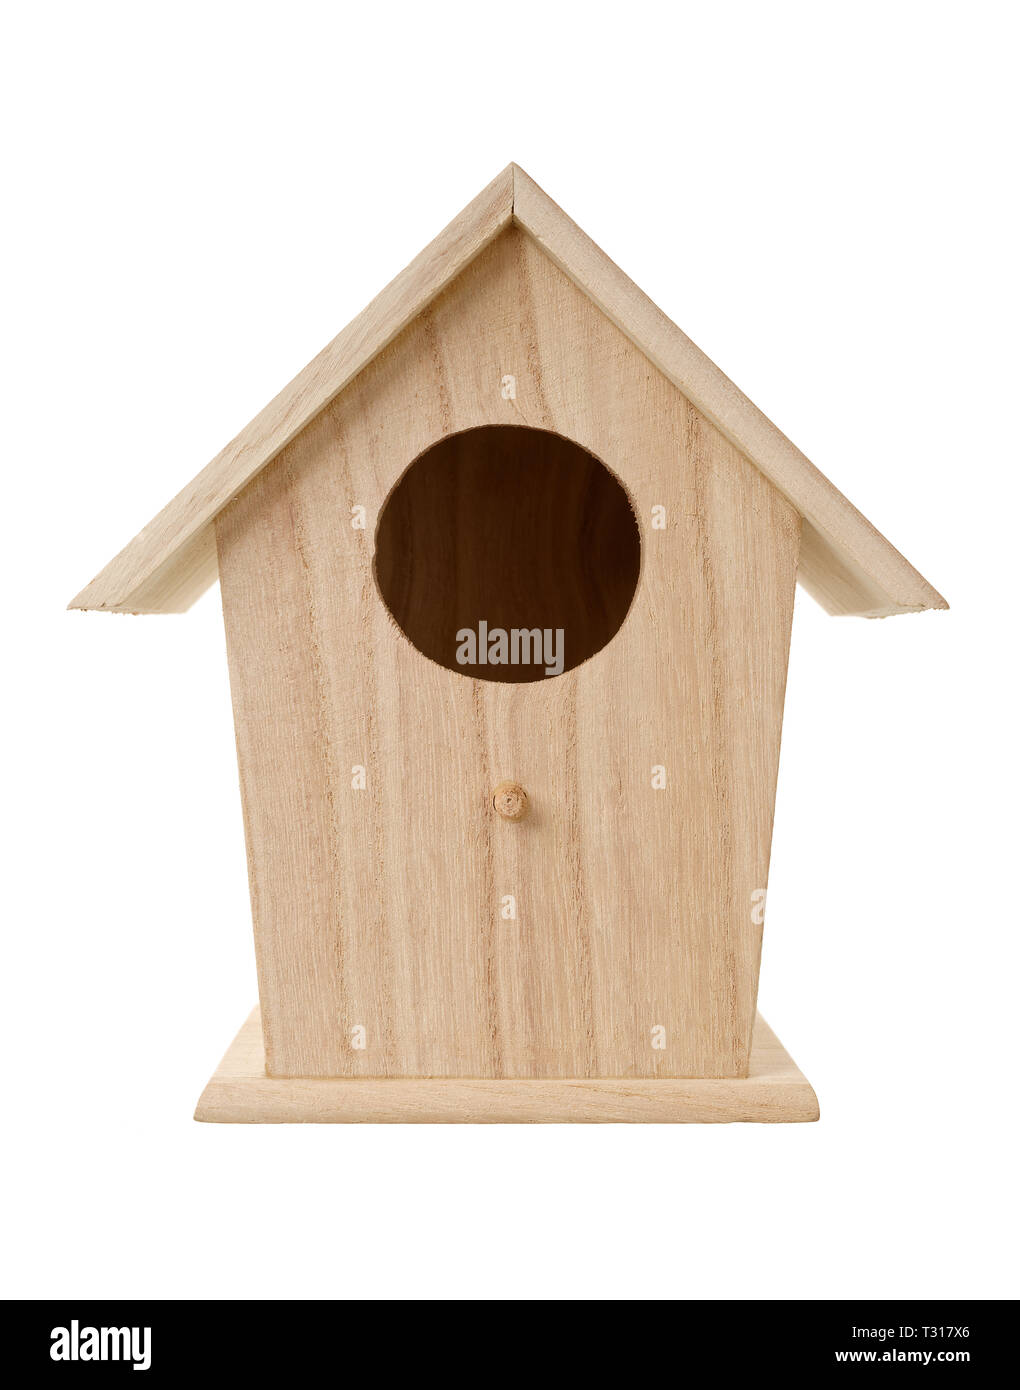 Isolated objects: handmade wooden bird nesting box, bird house, on white background Stock Photo